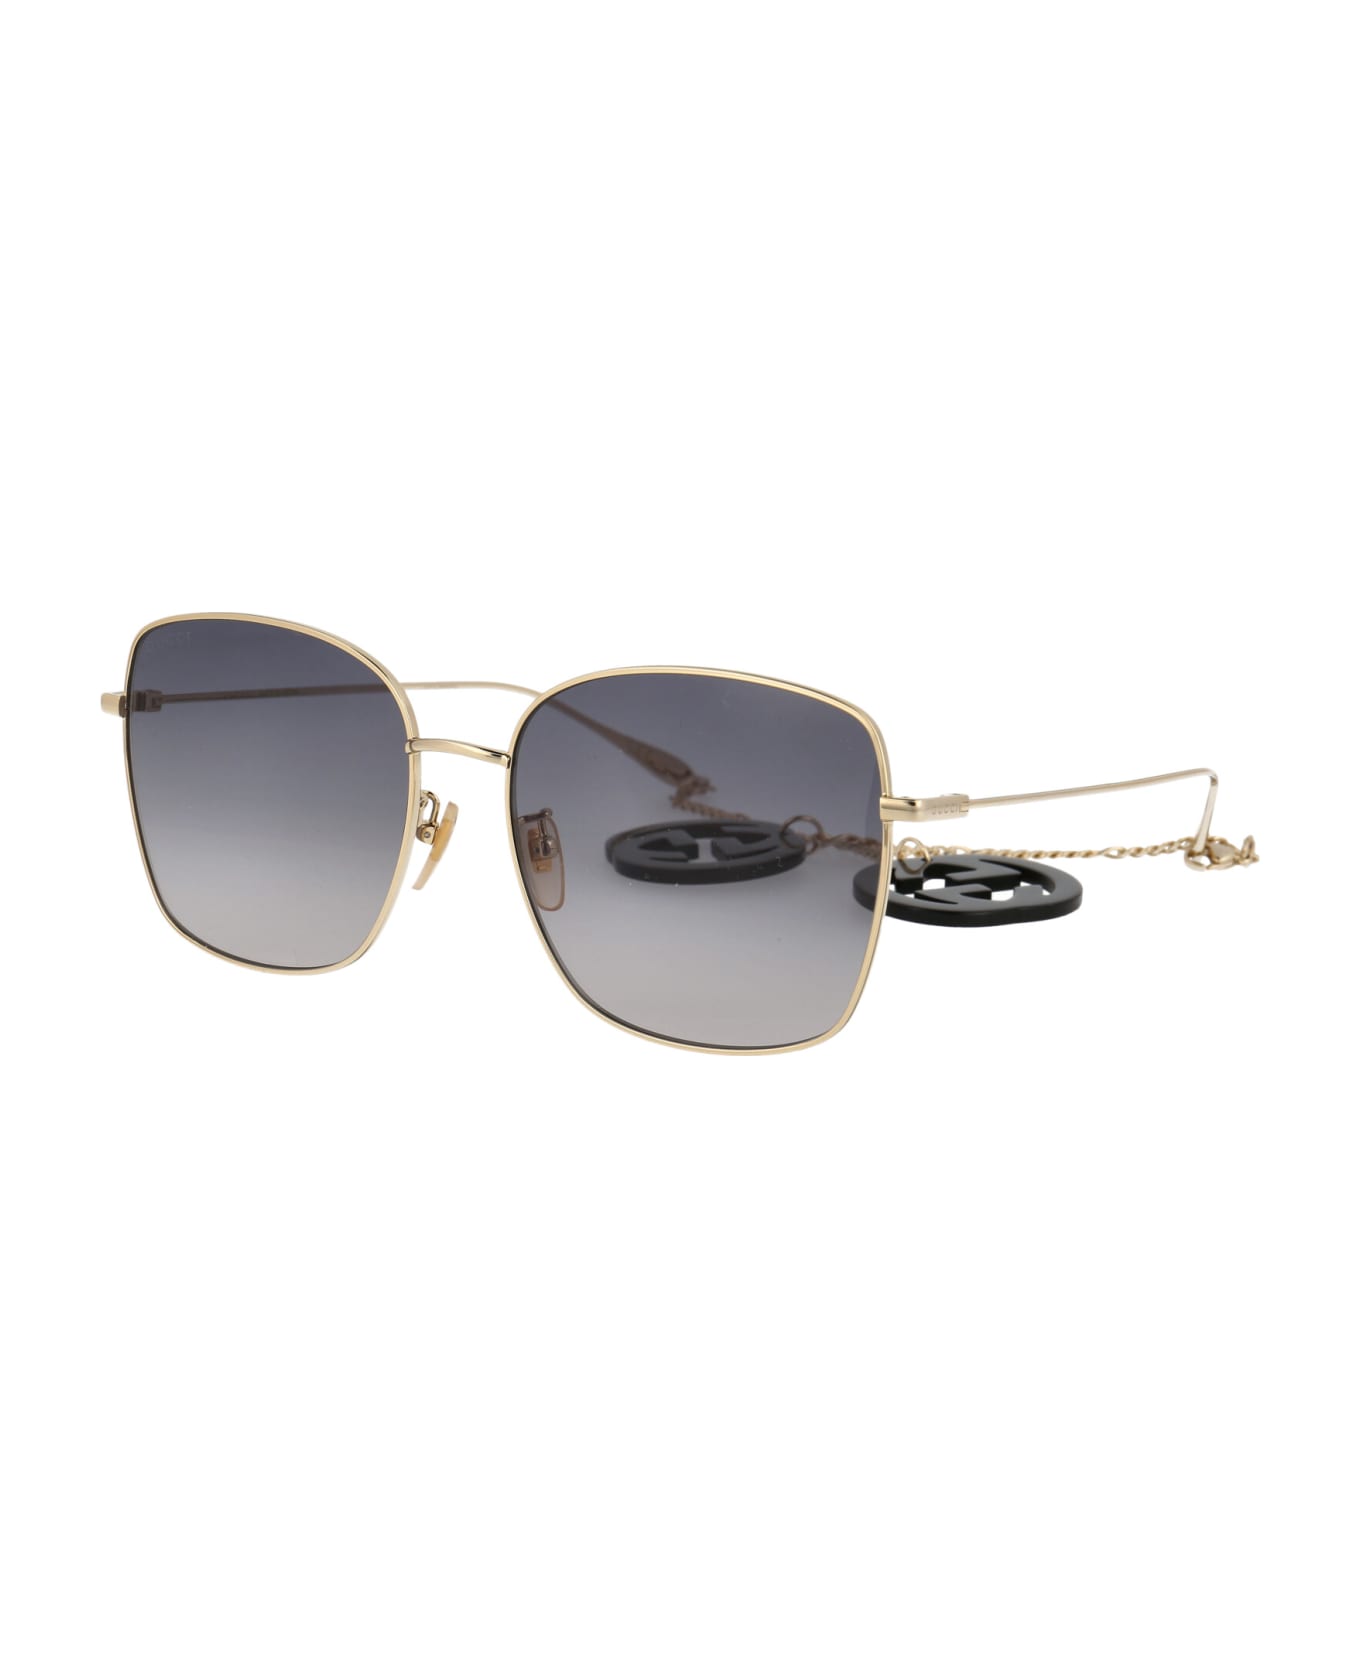 Gucci Eyewear Gg1030sk Sunglasses - 001 GOLD GOLD GREY